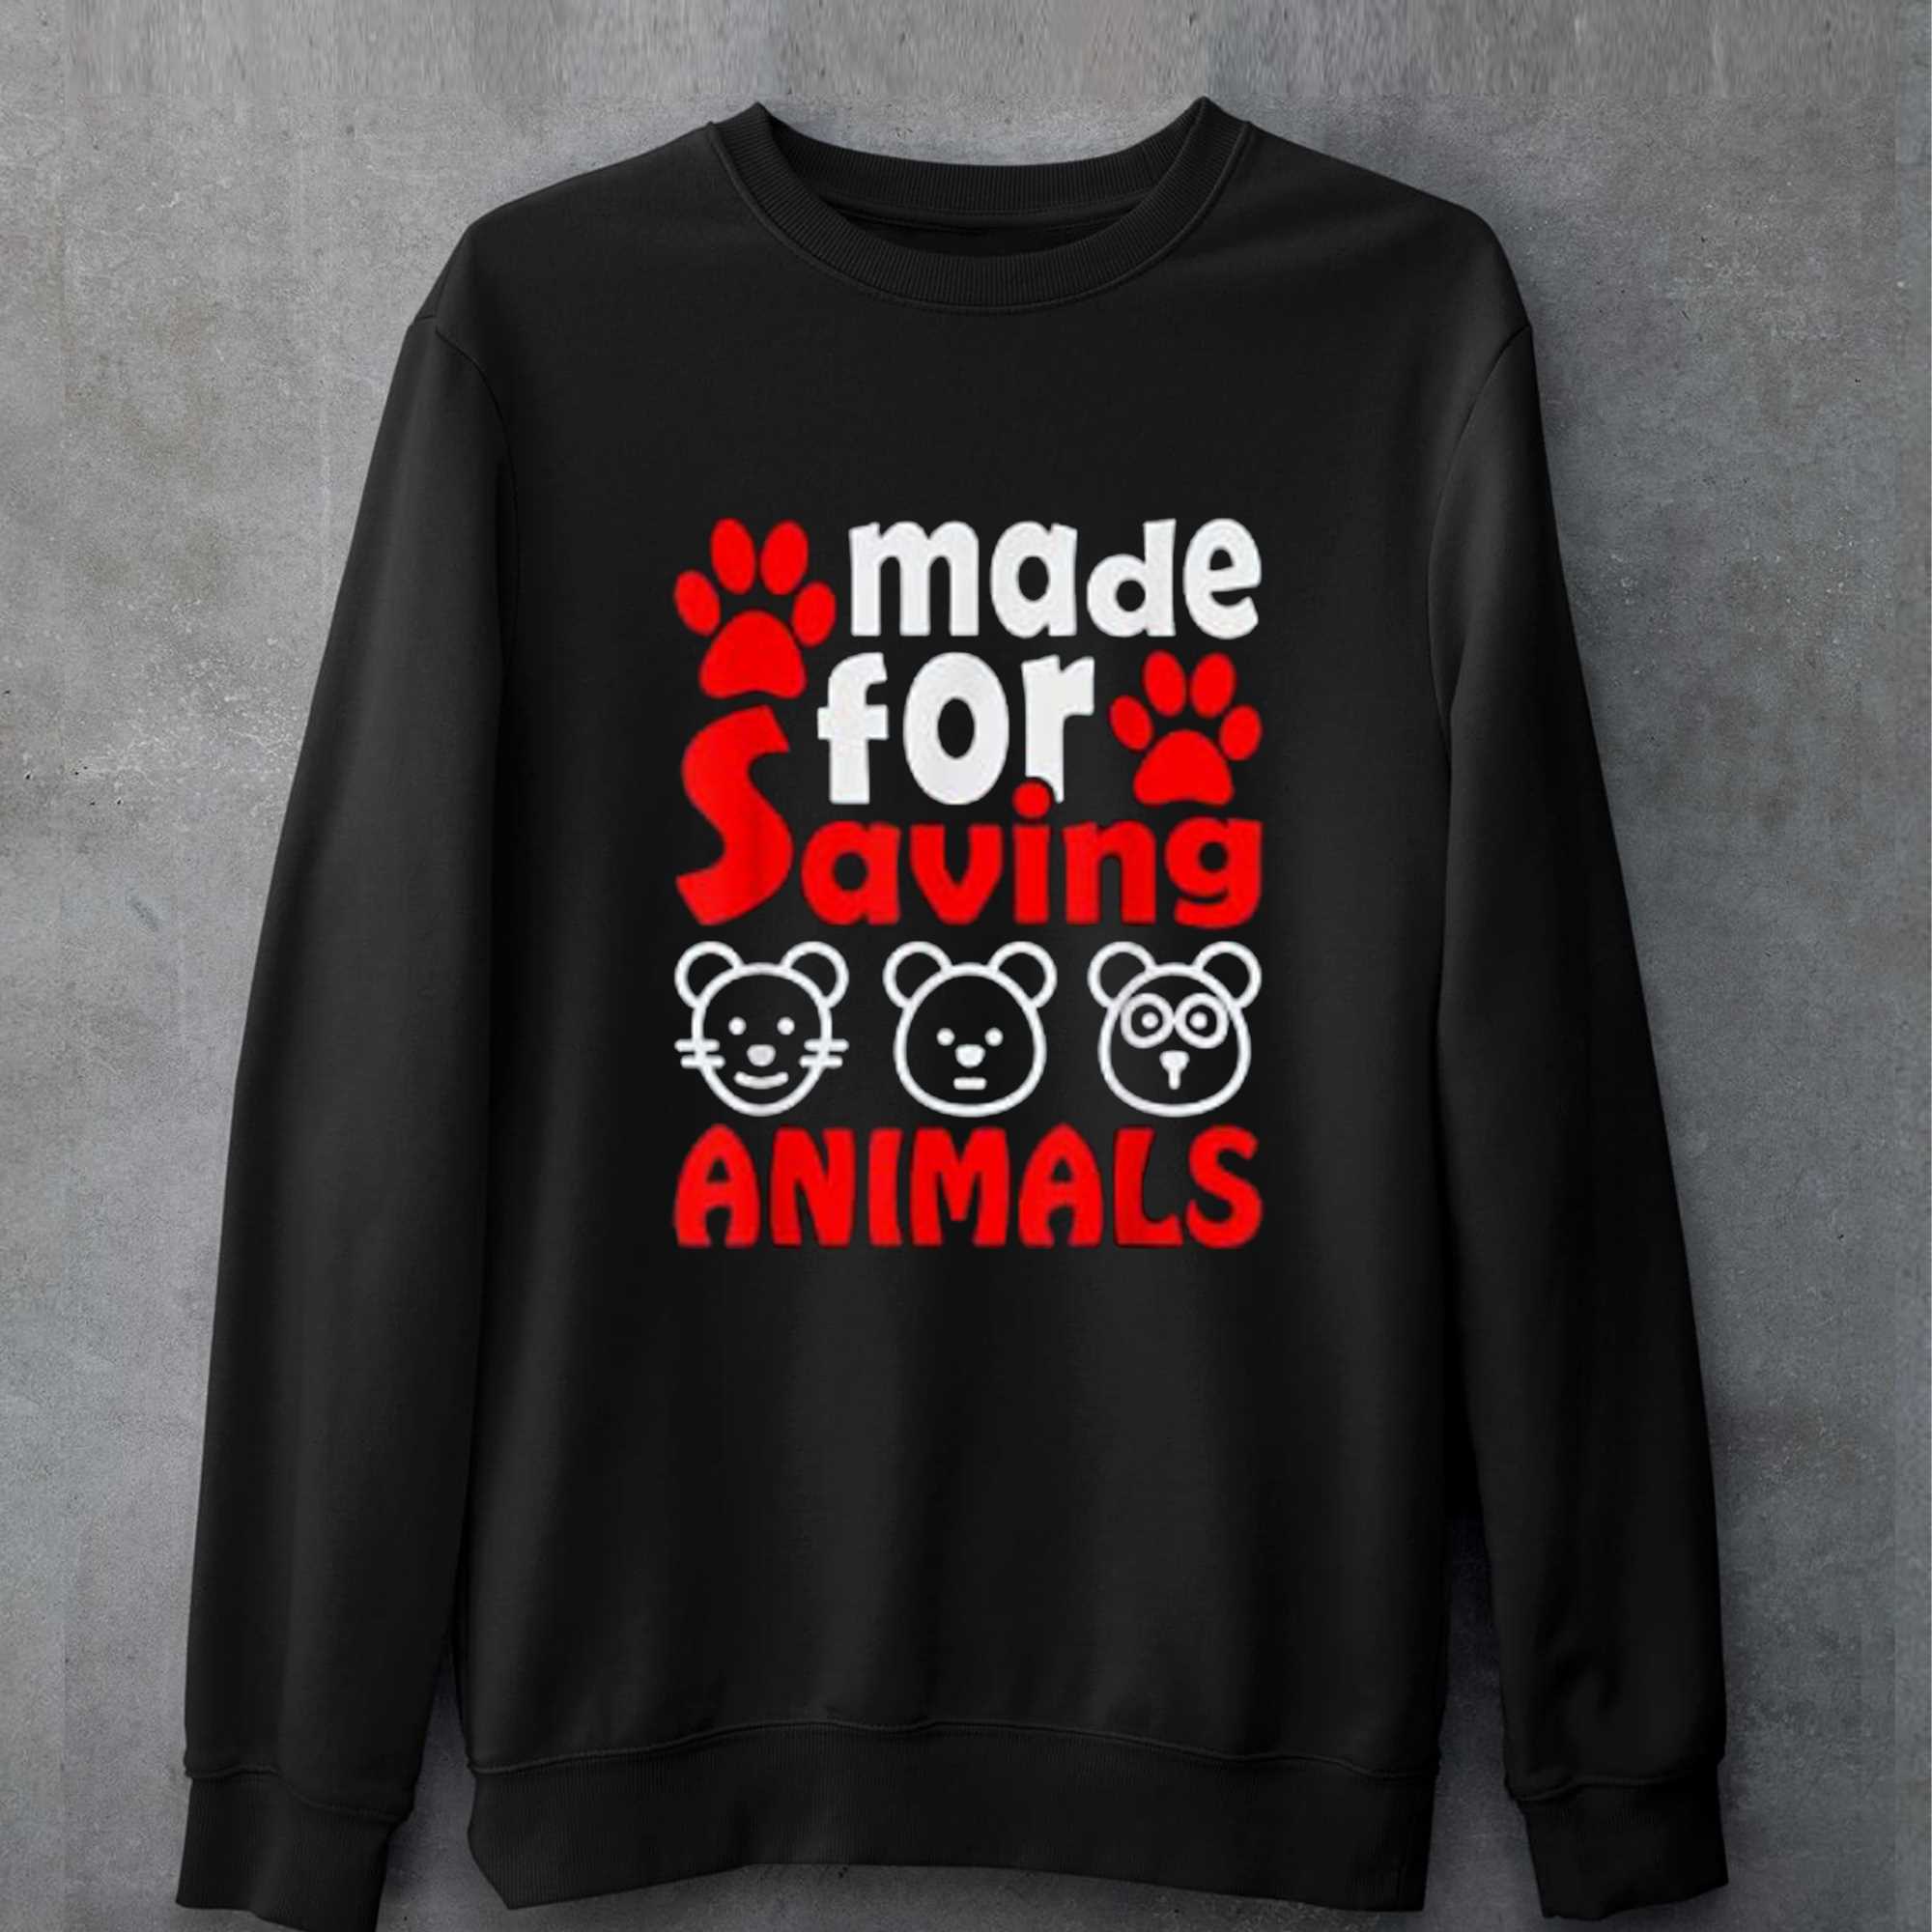 Made For Saving Animals Shirt 